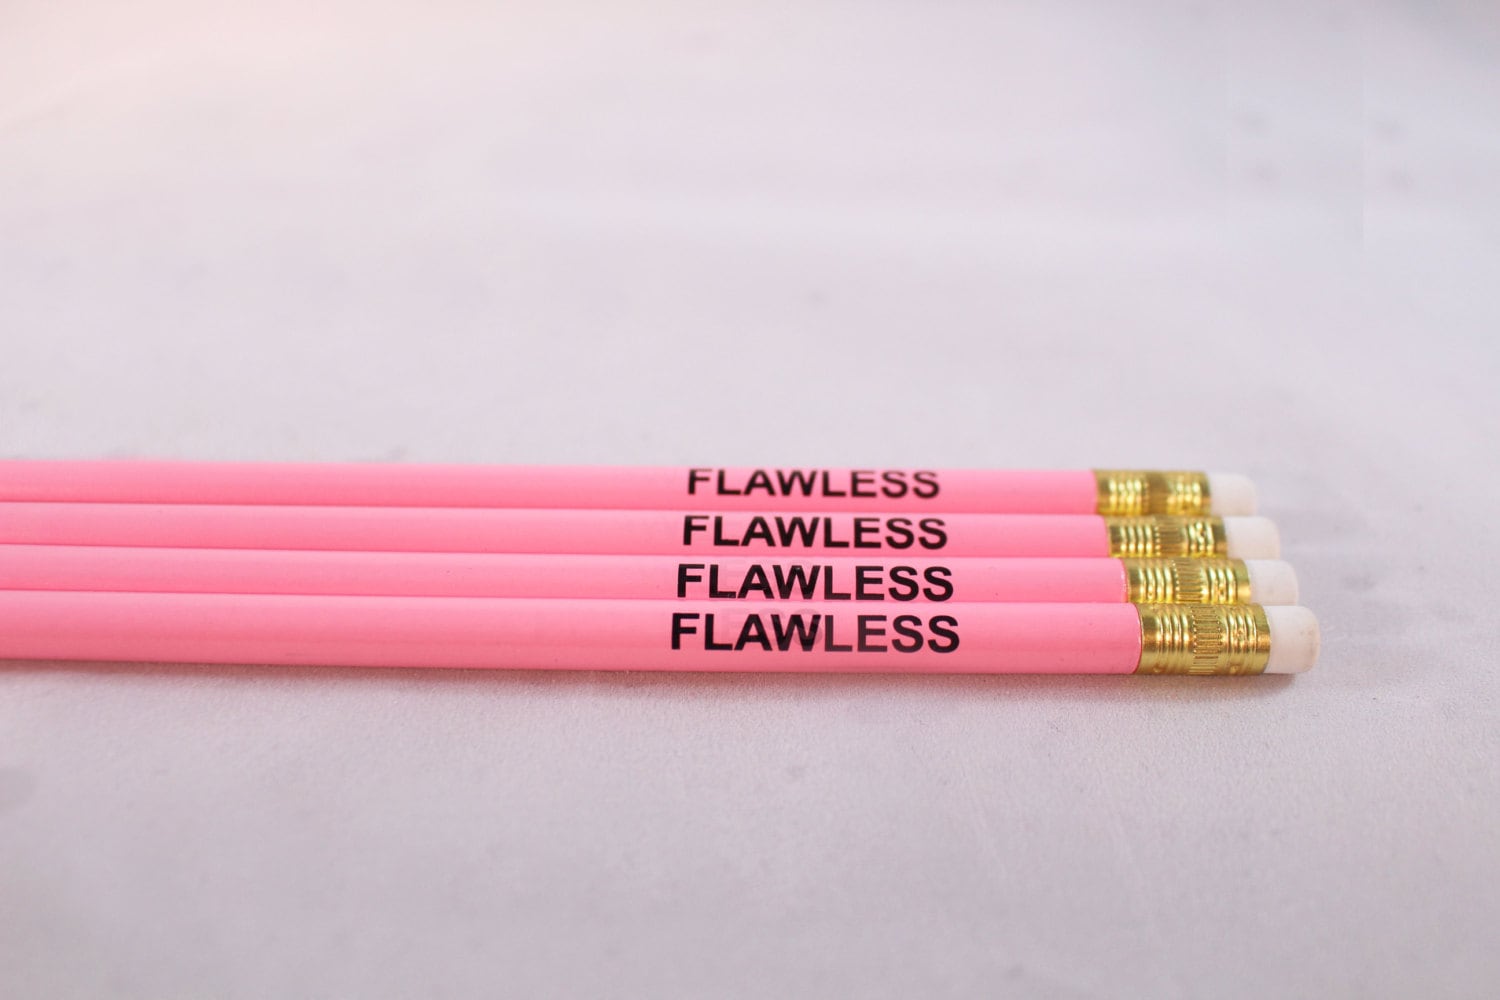 Flawless pencils